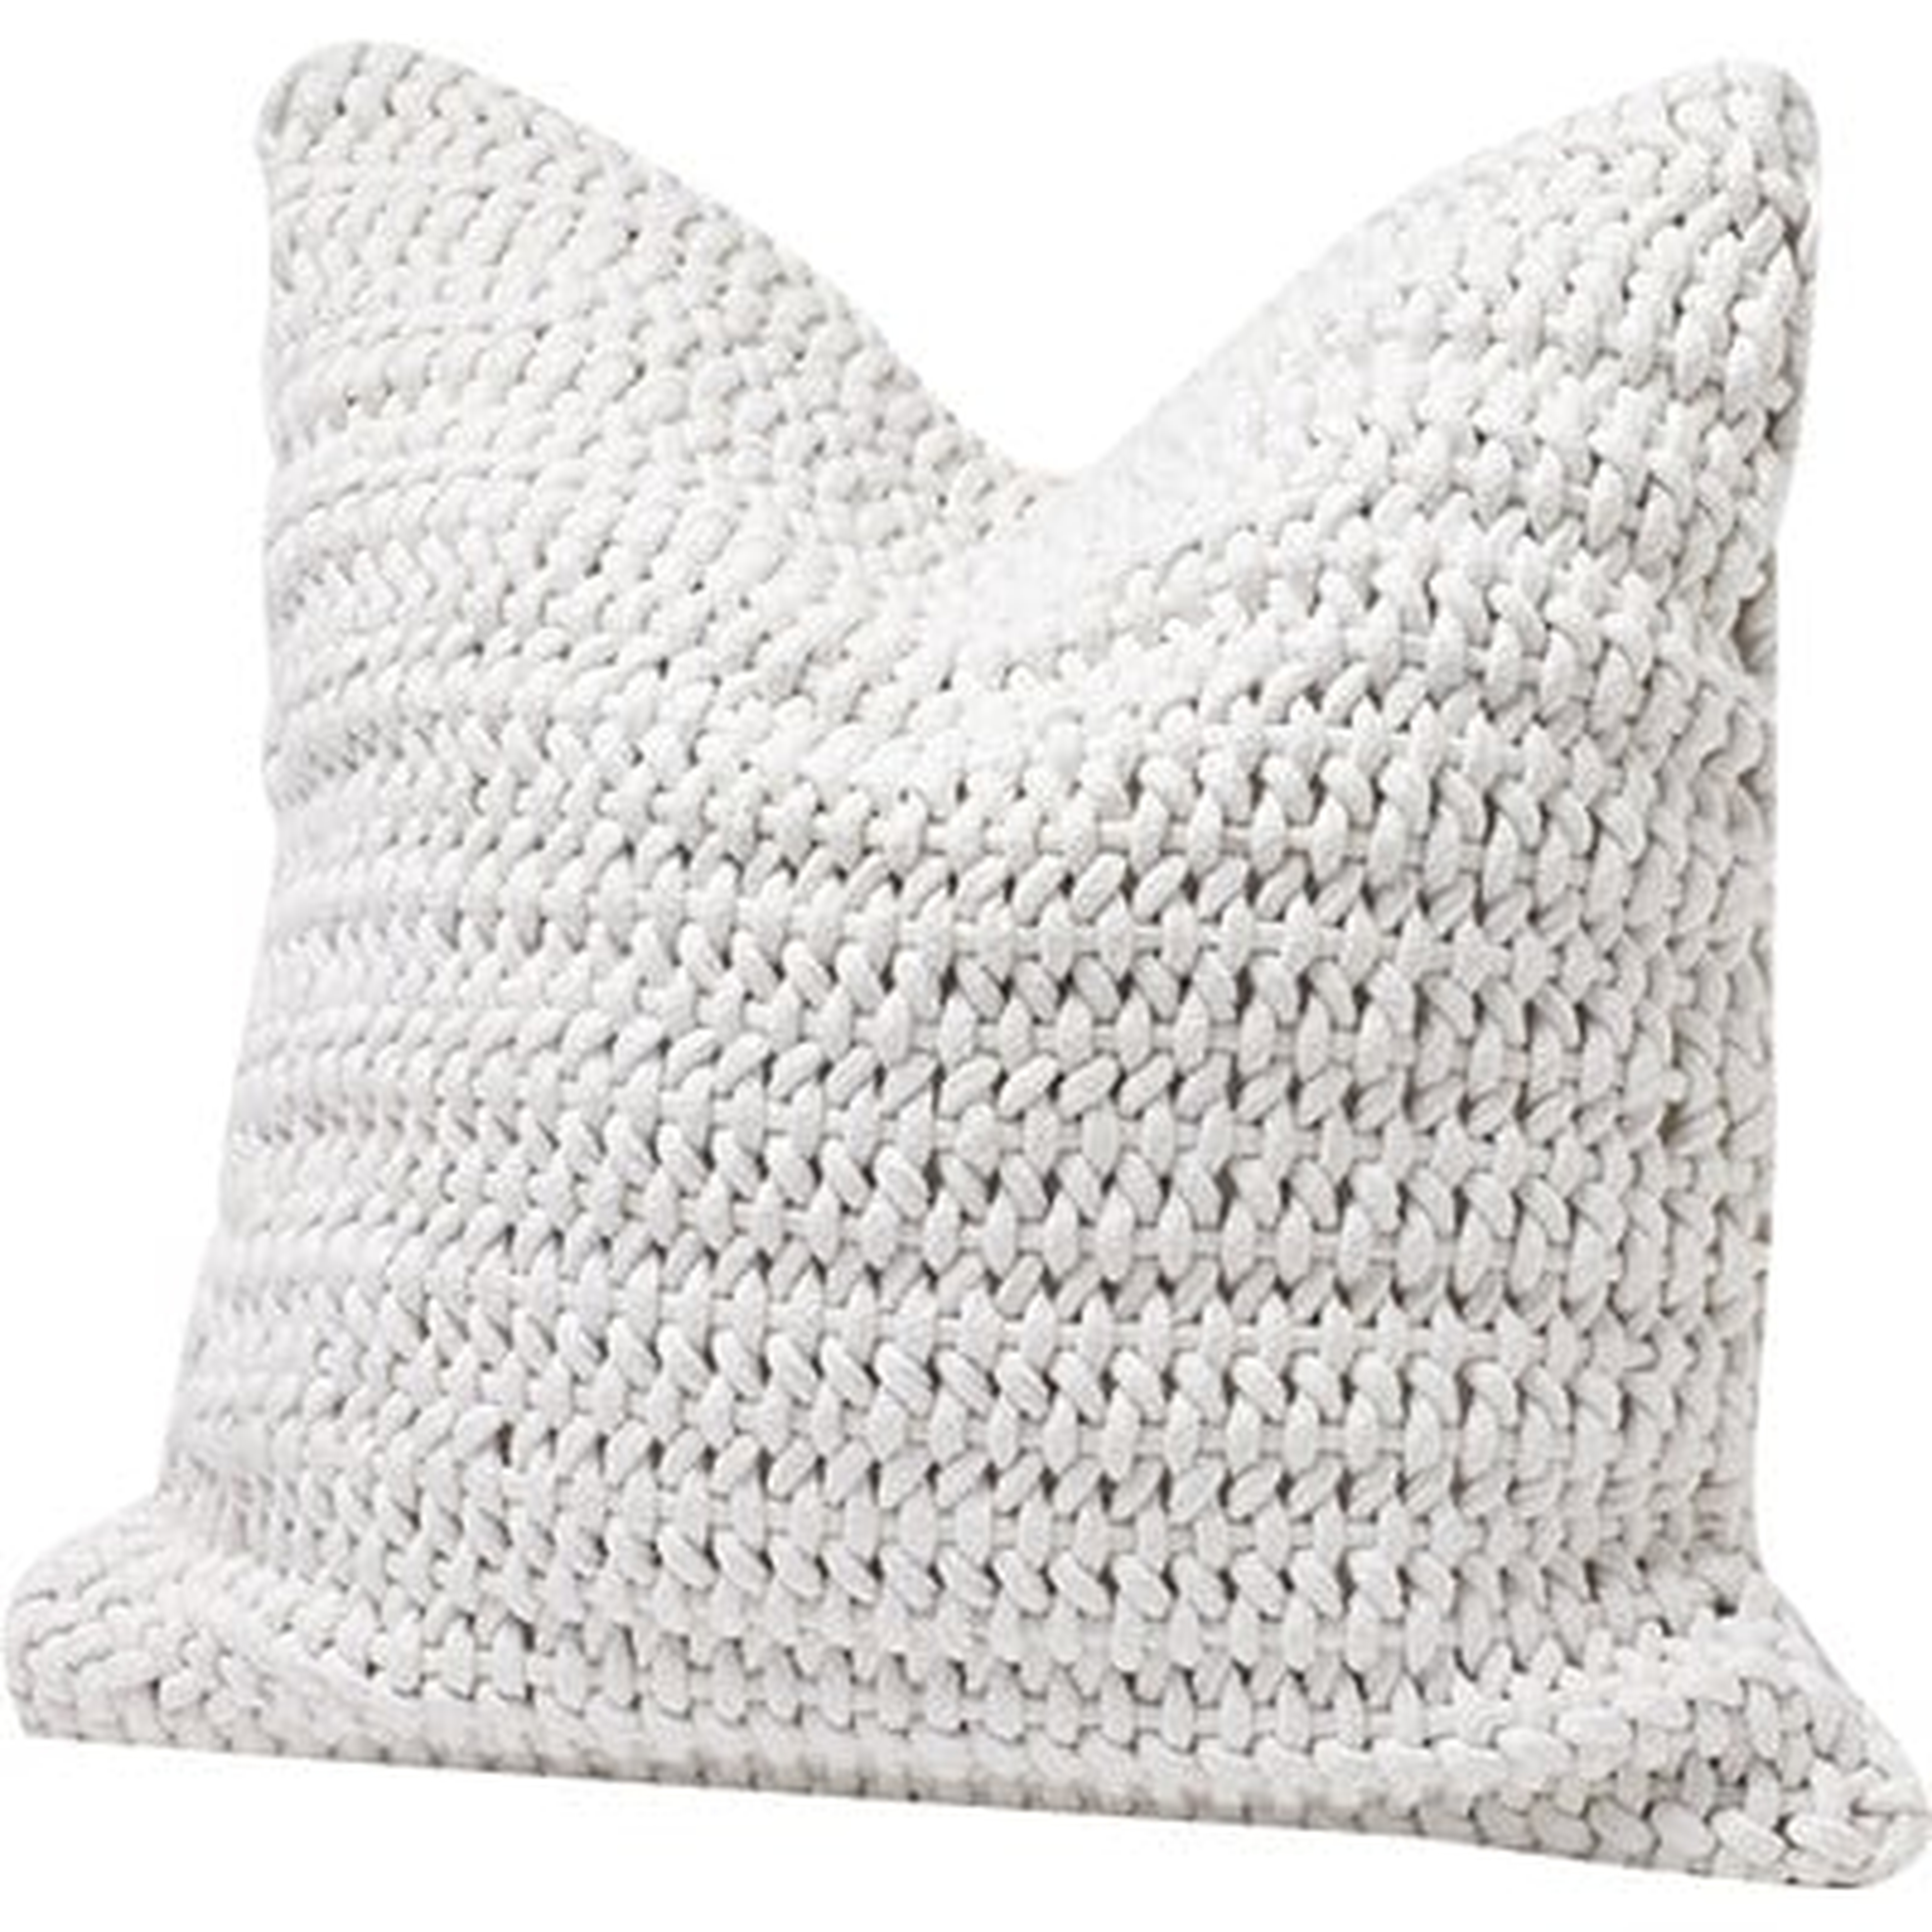 Woven Rope Cotton Pillow Cover, Alpine White, 22" x 22" - Wayfair